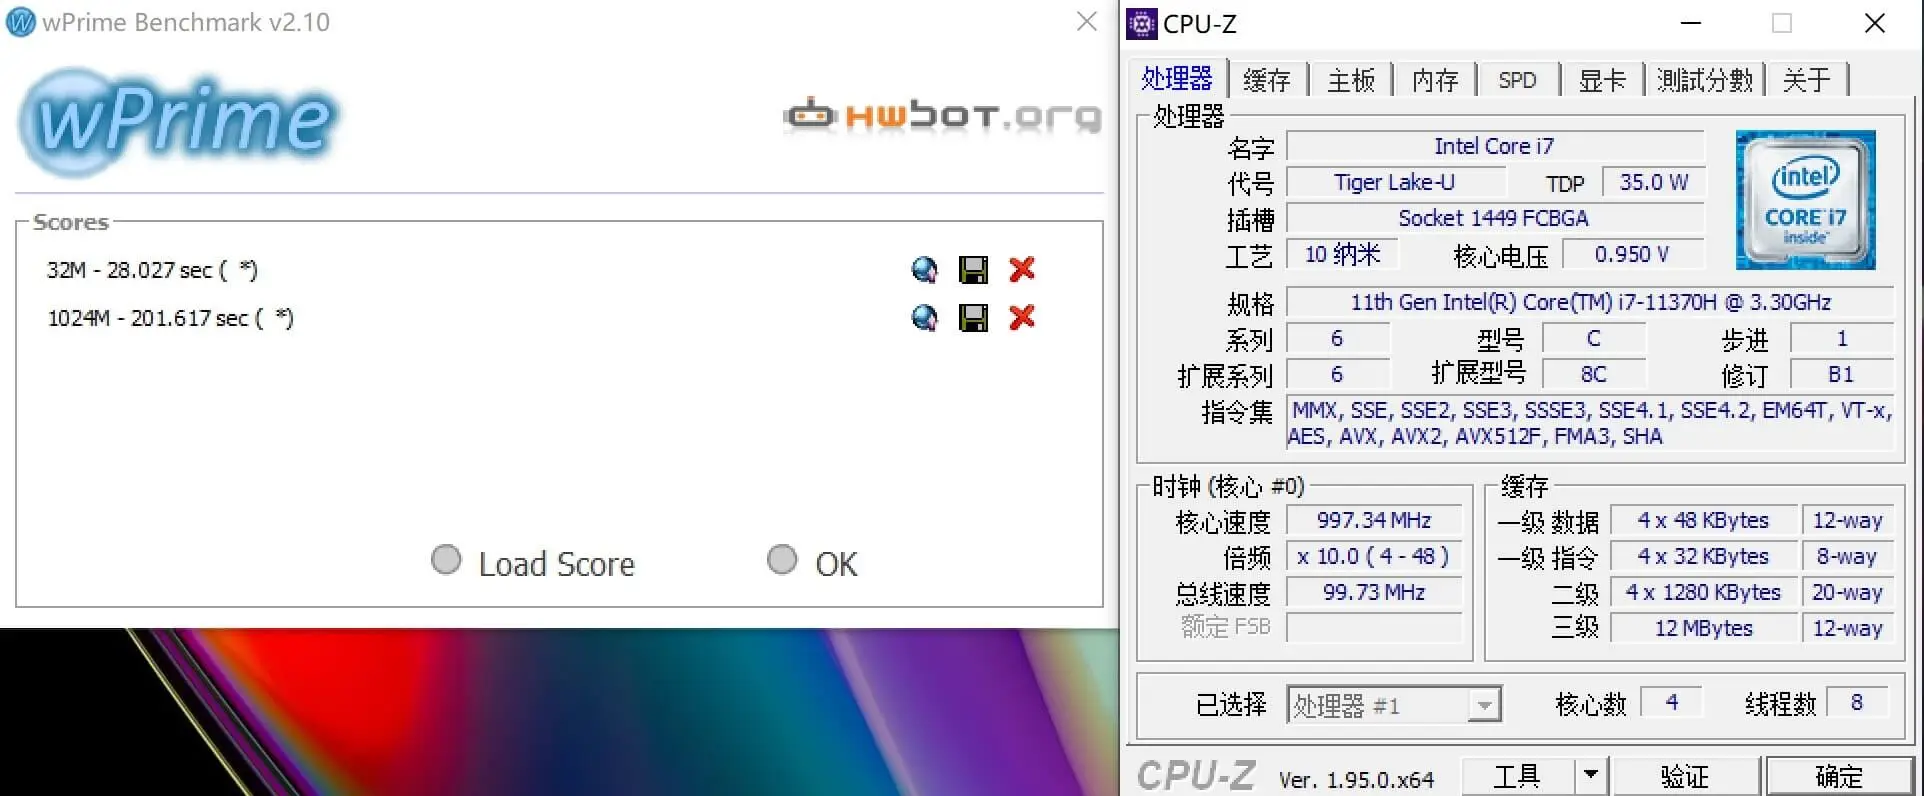 Xiaomi Mi Notebook Pro 15